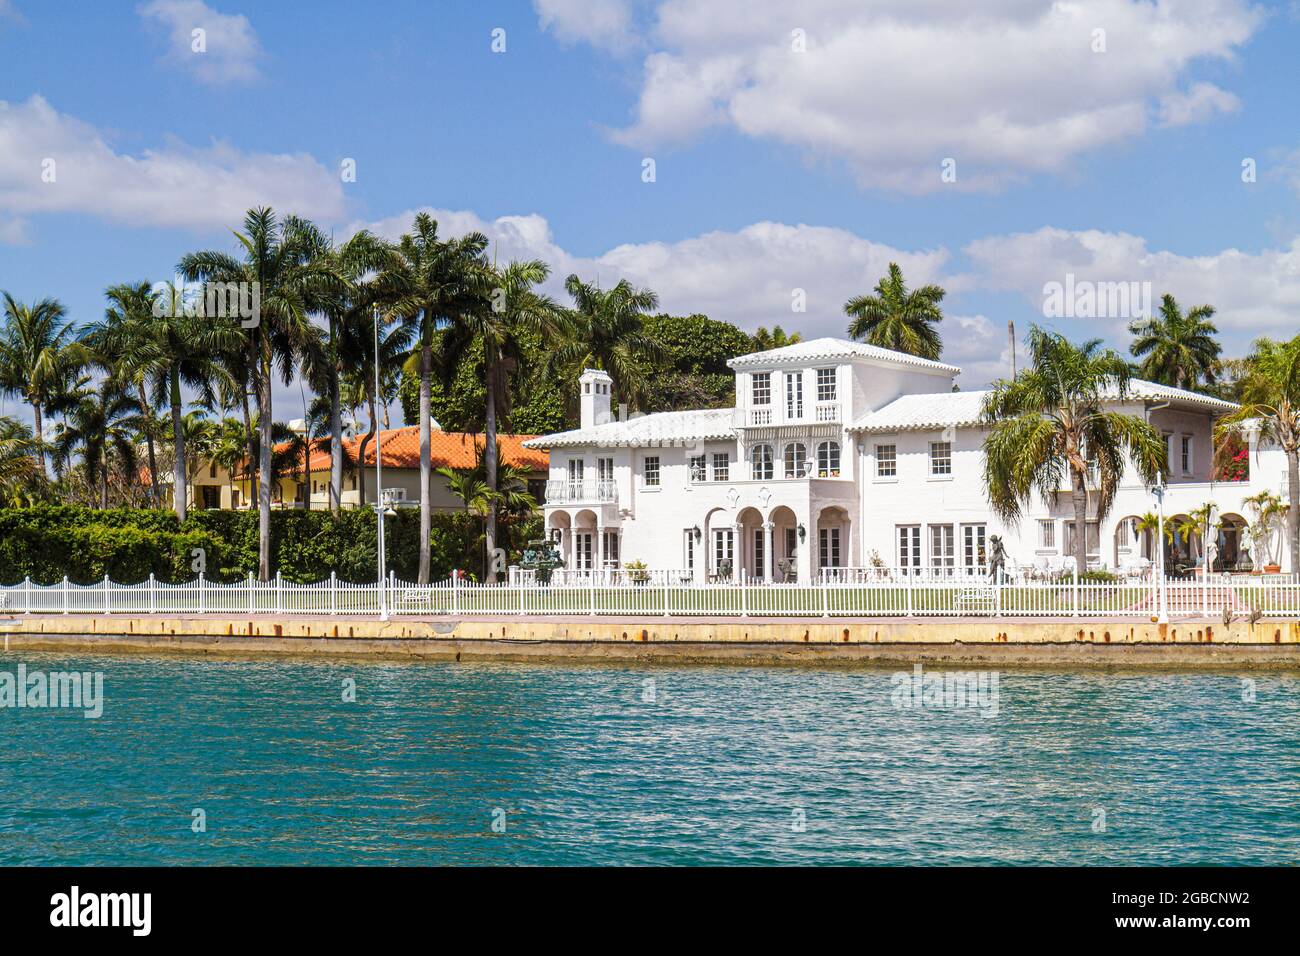 Miami Beach Florida, Biscayne Bay Star Island, 42 Star Island Drive am Wasser Haus, Villa Scarface Film Drehort Al Pacino, Stockfoto